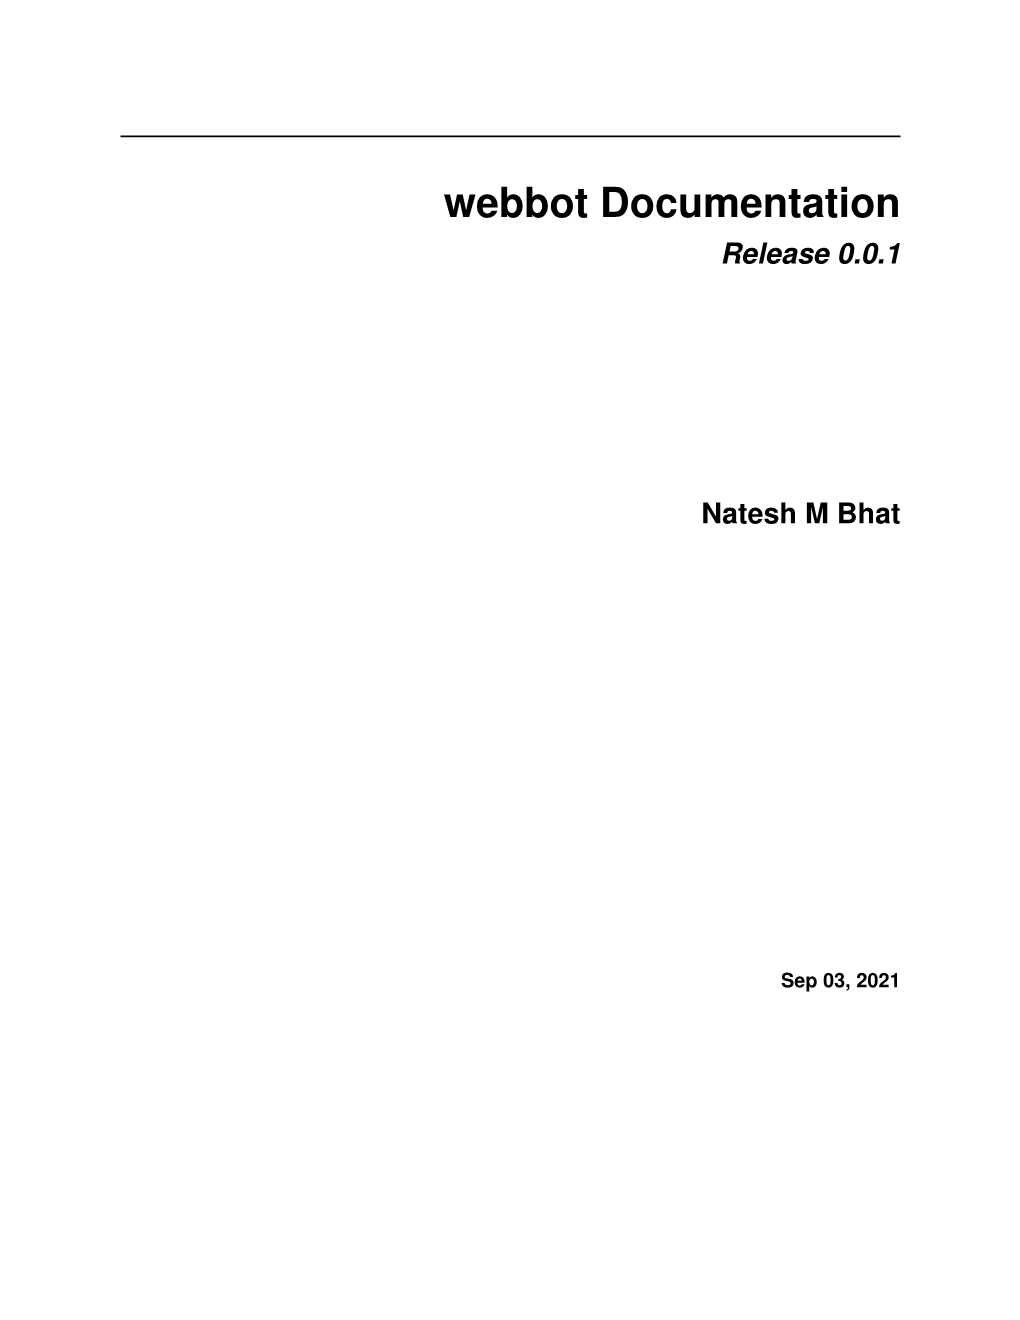 Webbot Documentation Release 0.0.1